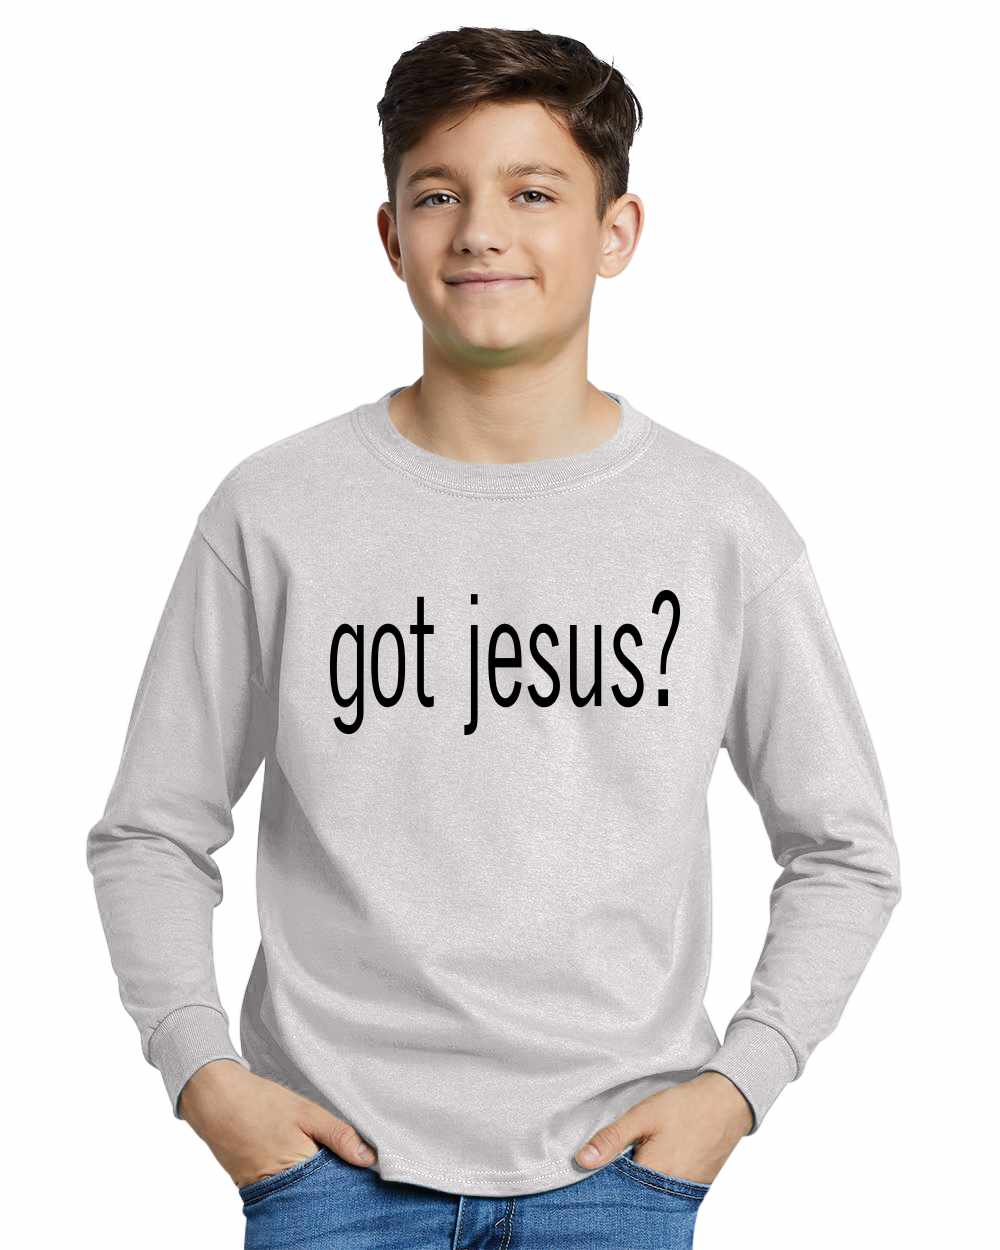 Got Jesus on Youth Long Sleeve Shirt (#79-203)